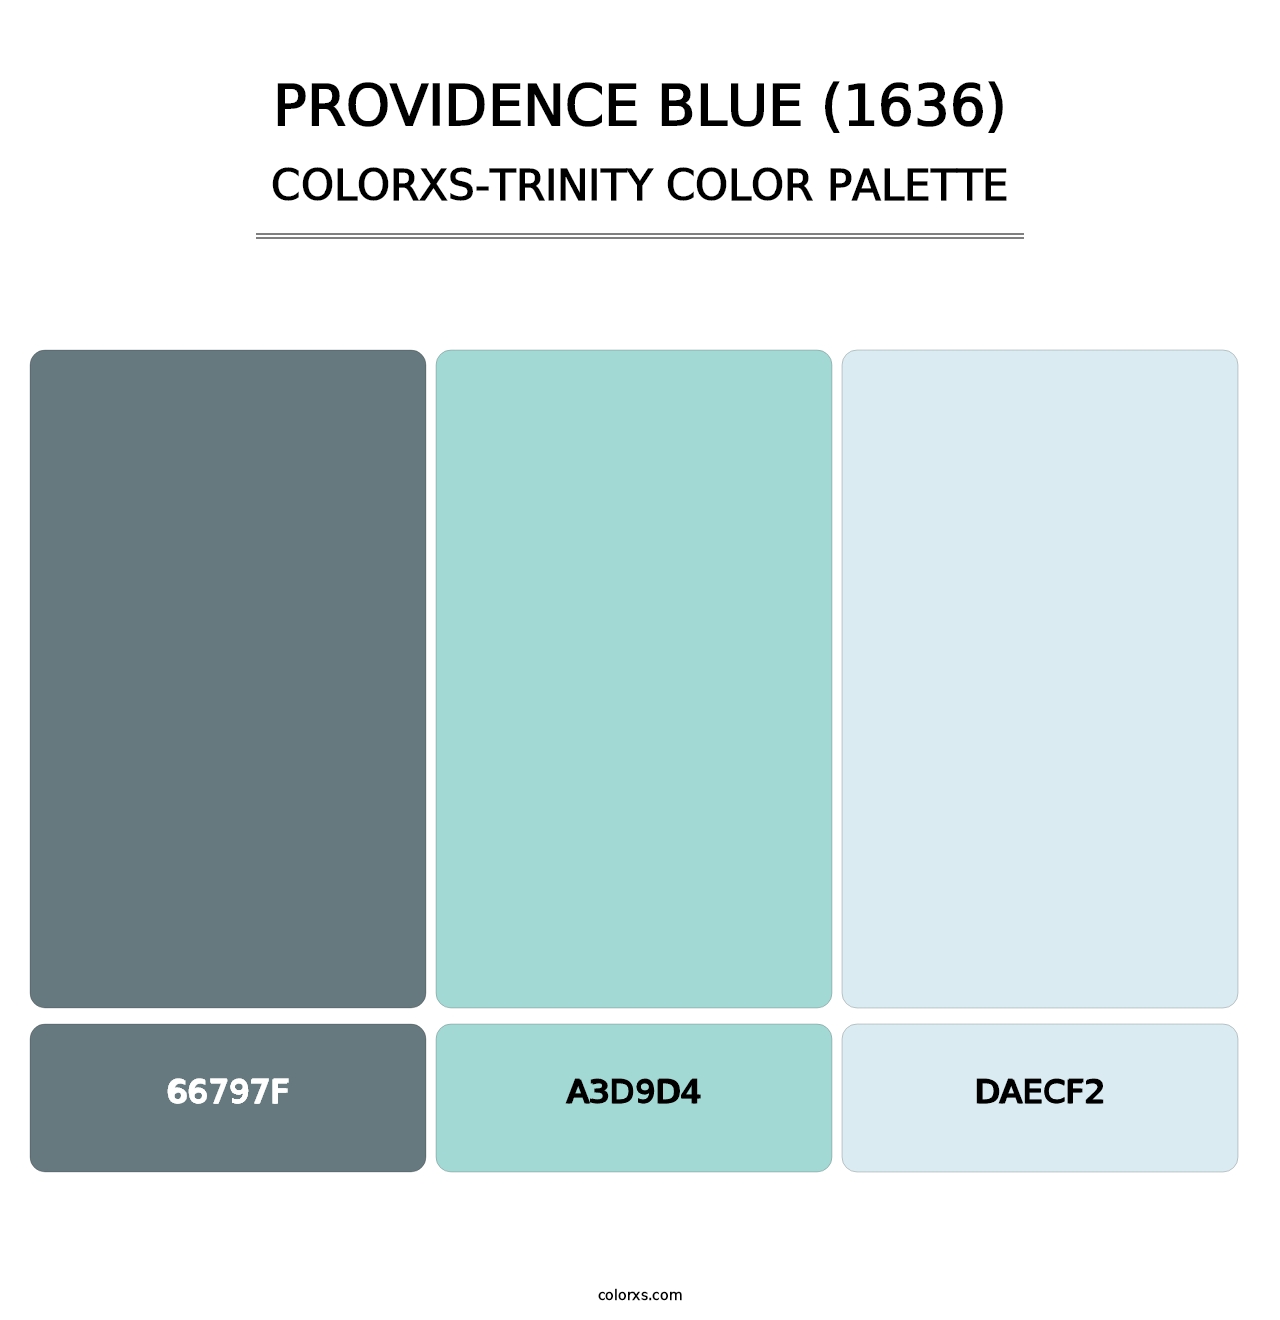 Providence Blue (1636) - Colorxs Trinity Palette